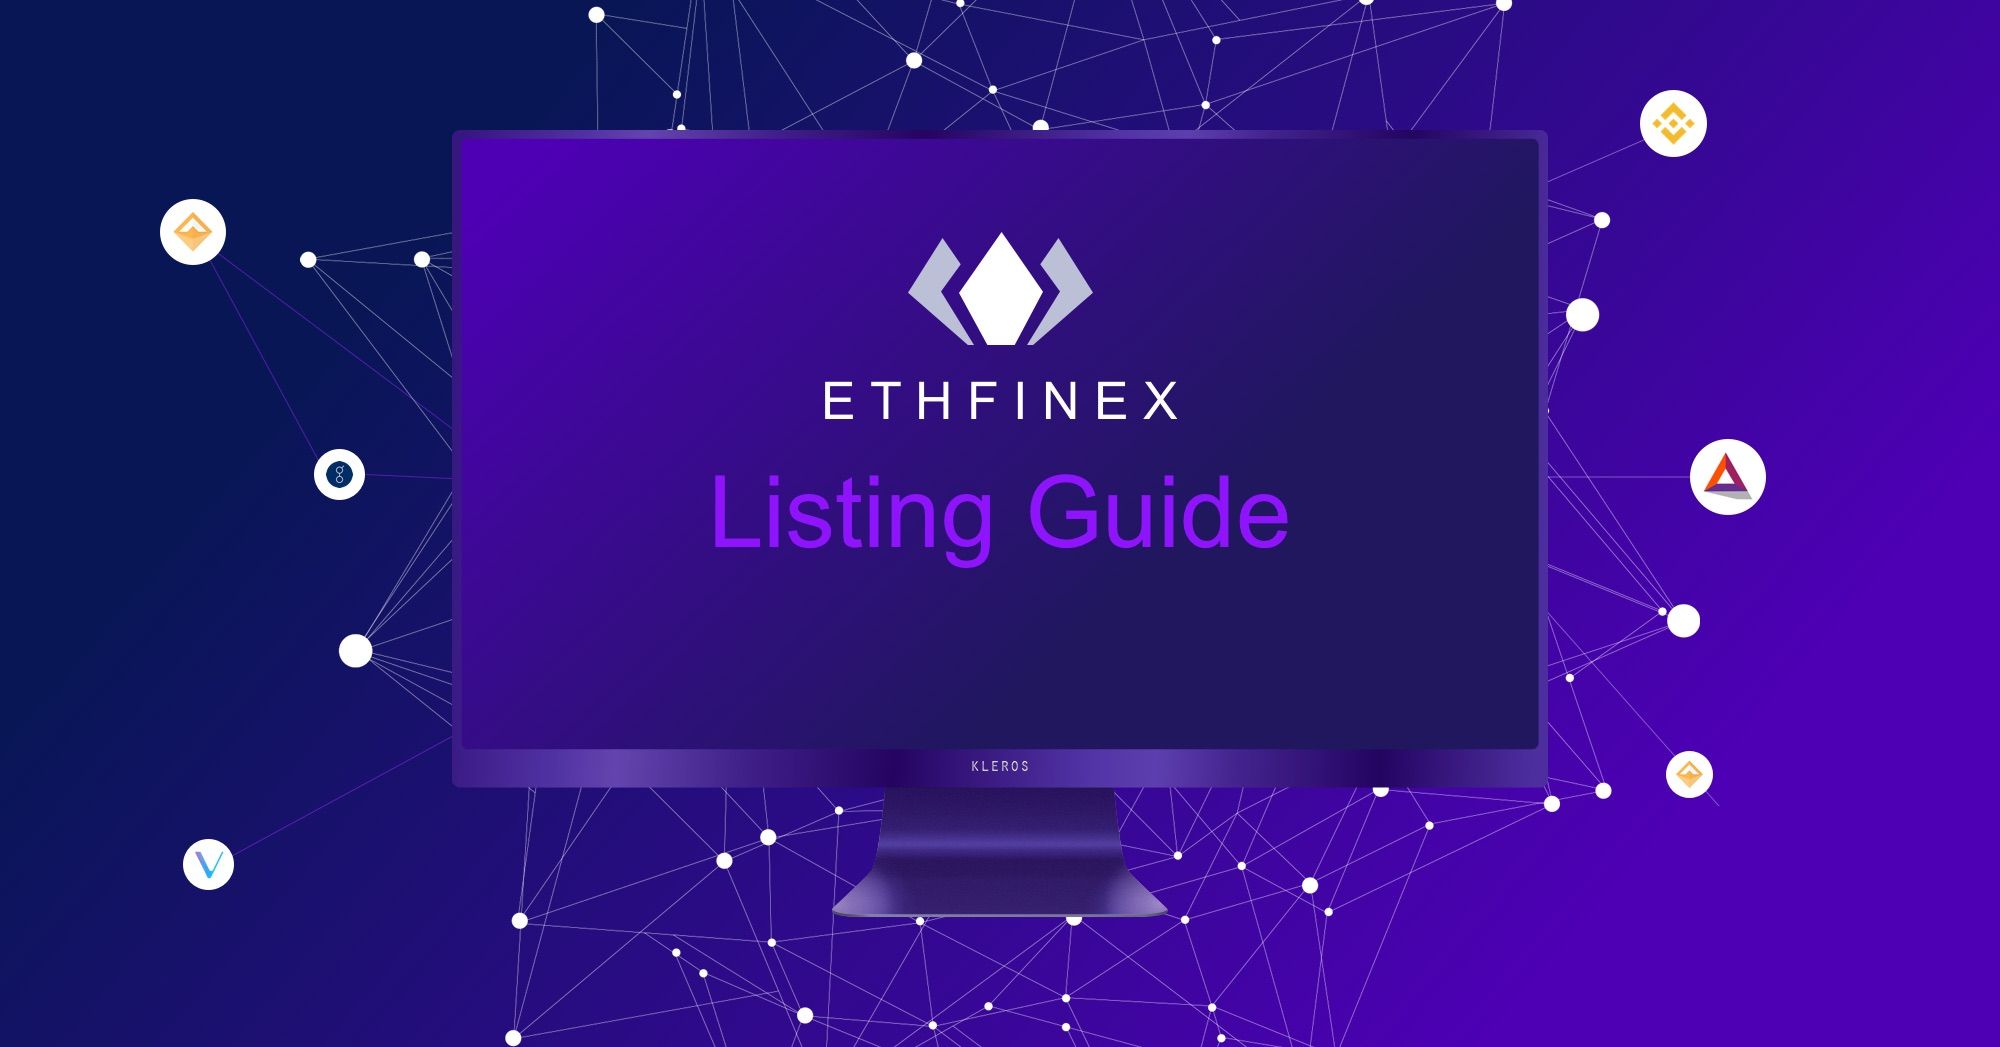 The Ethfinex Listing Guide